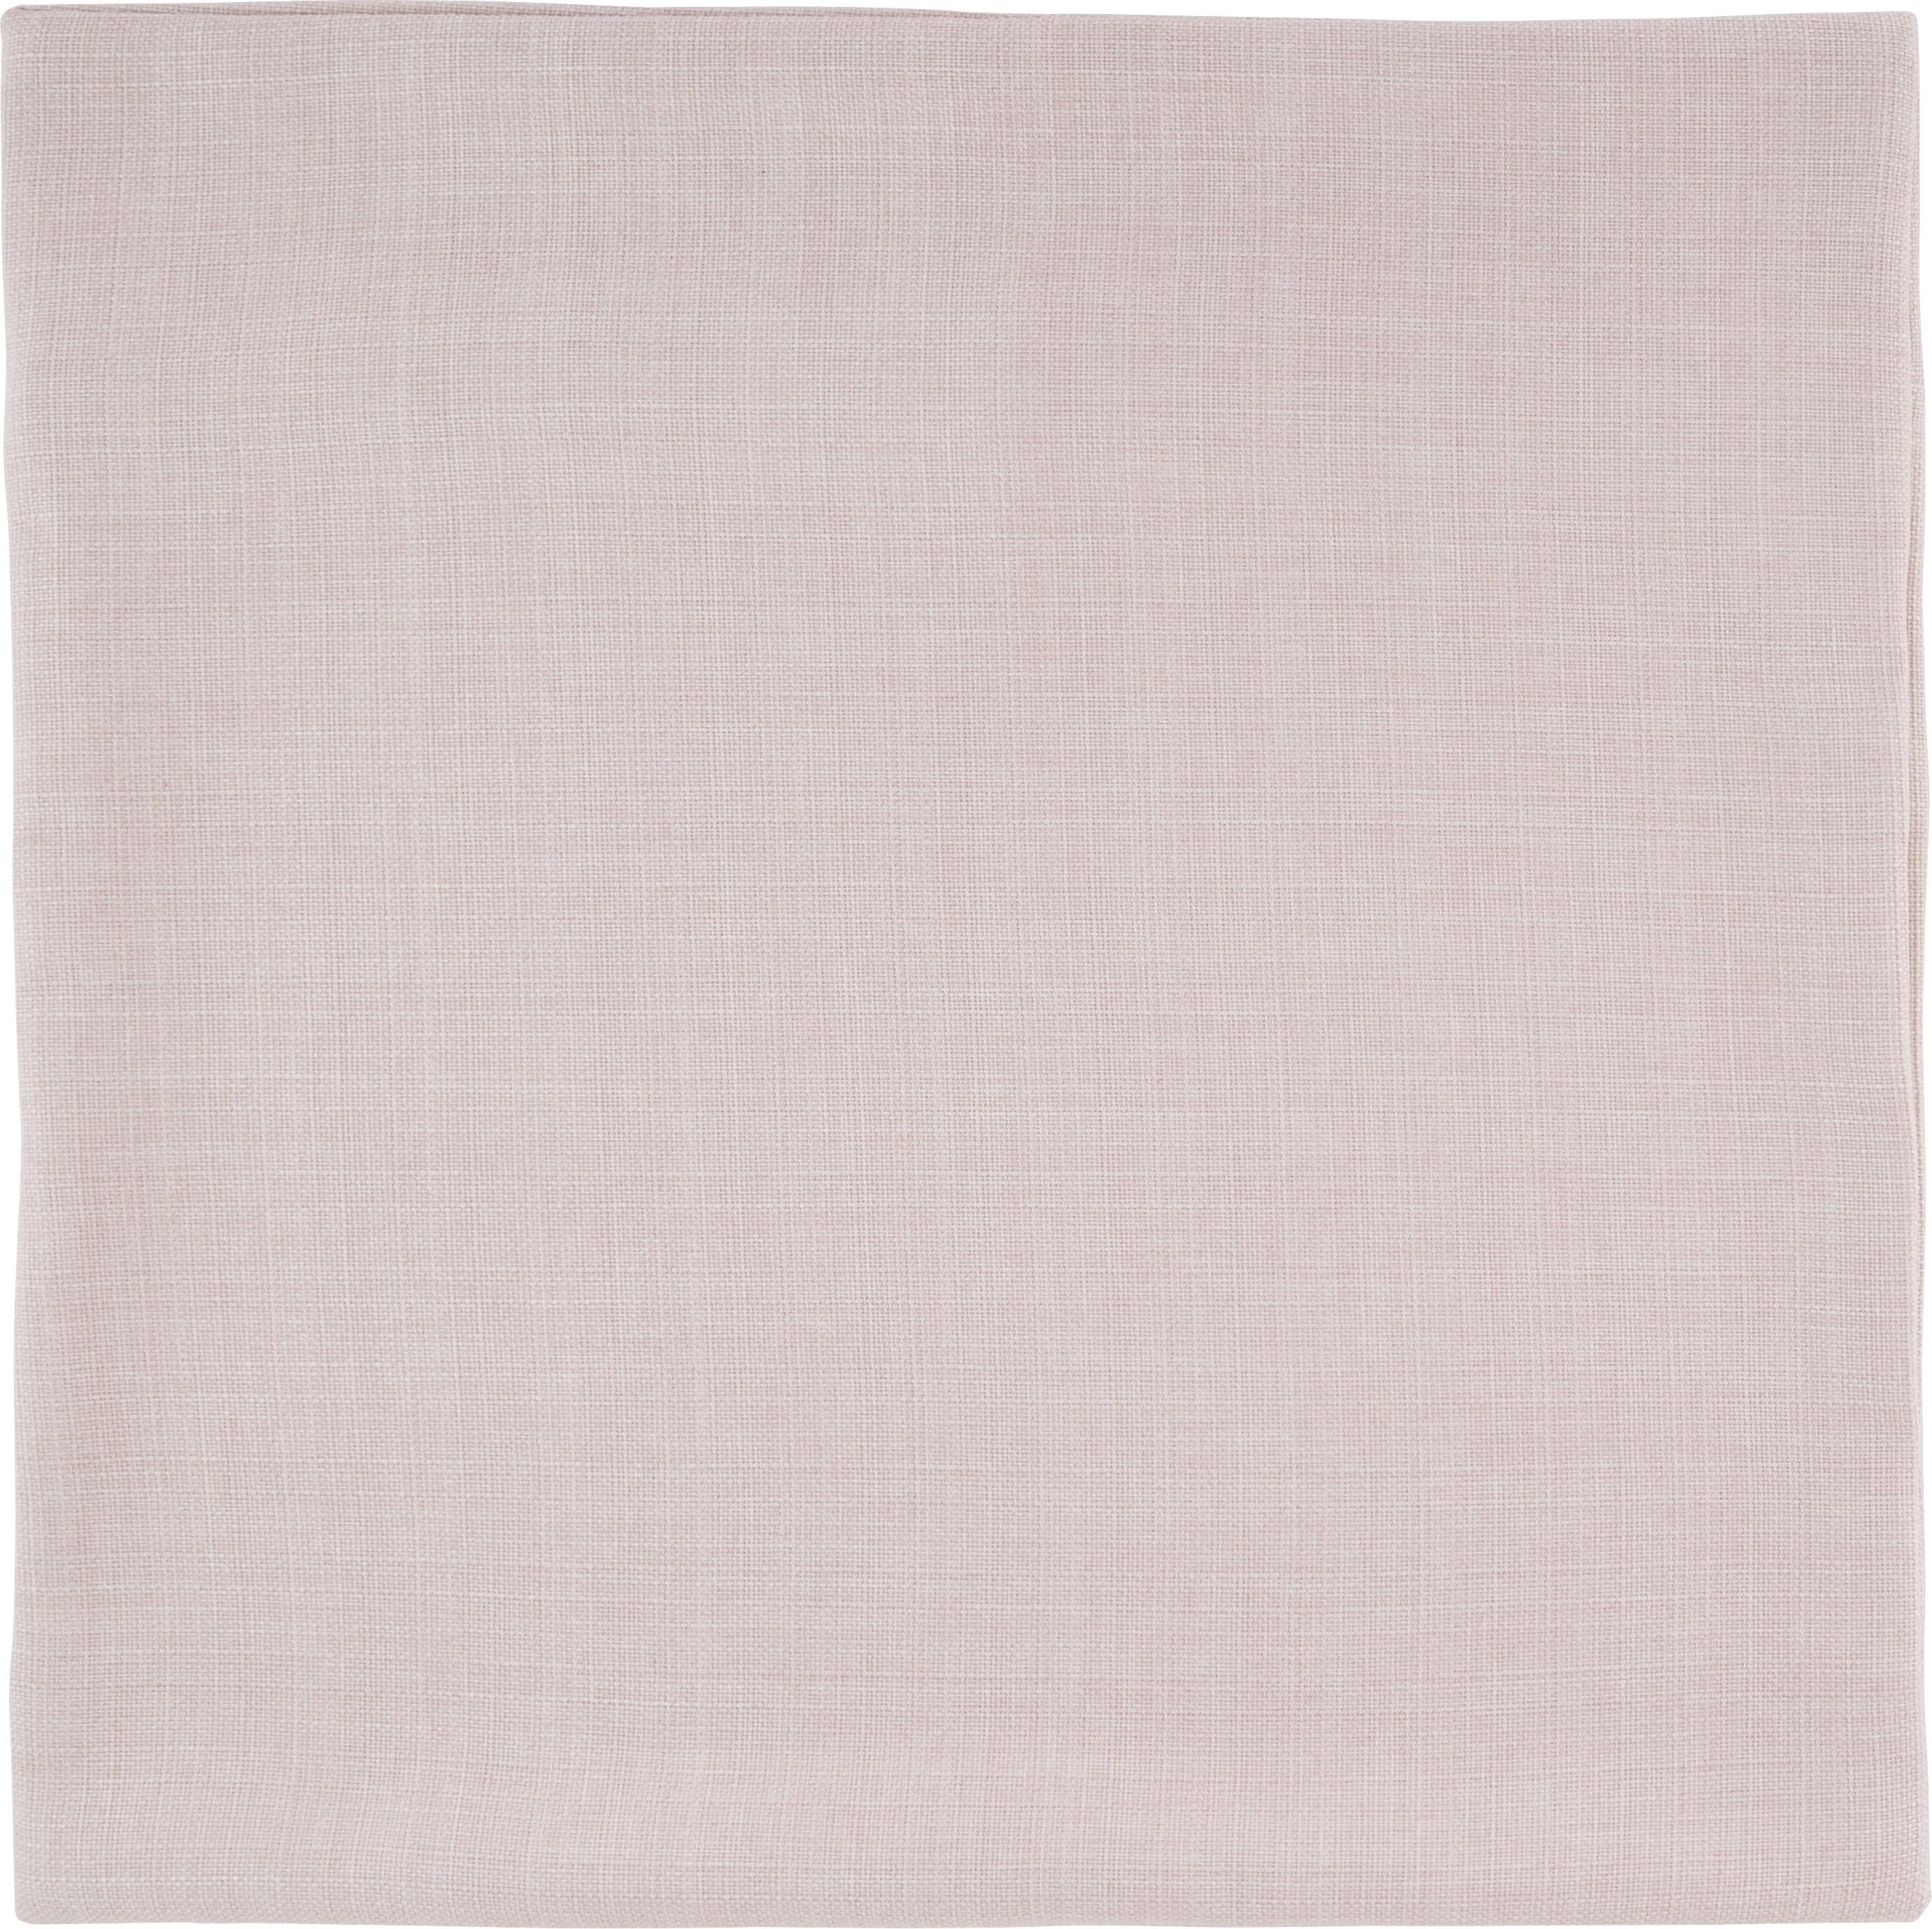 Kissenhülle Leinenoptik, ca. 50x50cm - Sandfarben, Konventionell, Textil (50/50cm) - Modern Living